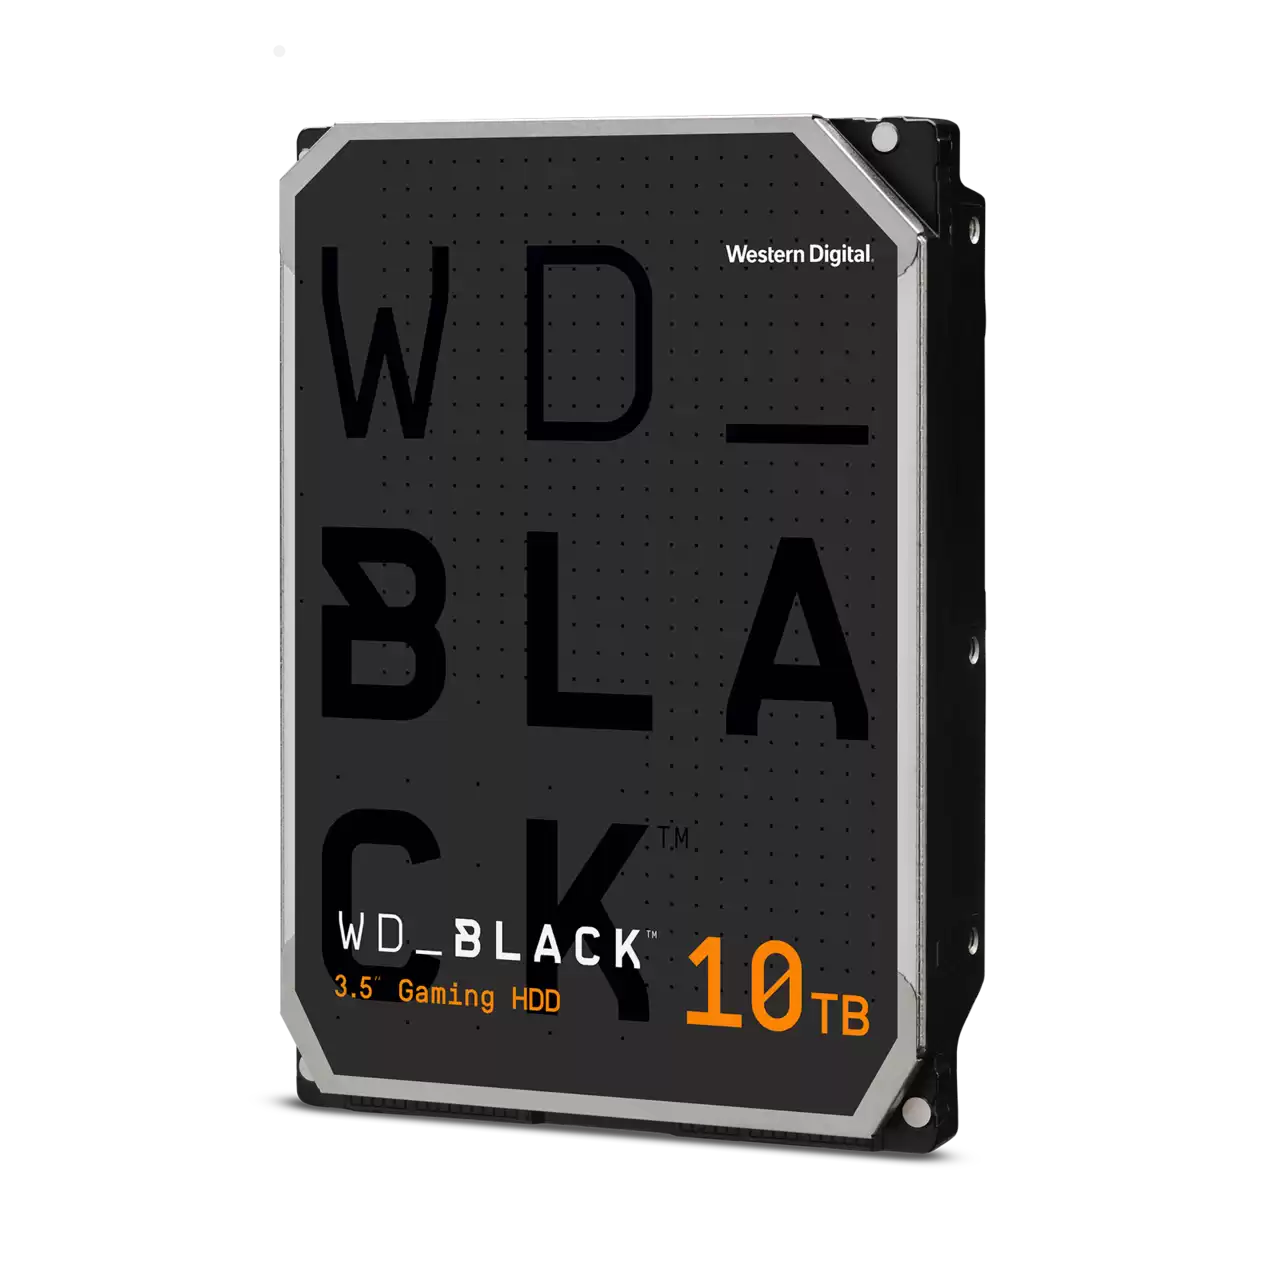 WD_BLACK 3.5-Inch Gaming Hard Drive - 10TB - 3.5 SATA - WD101FZBX